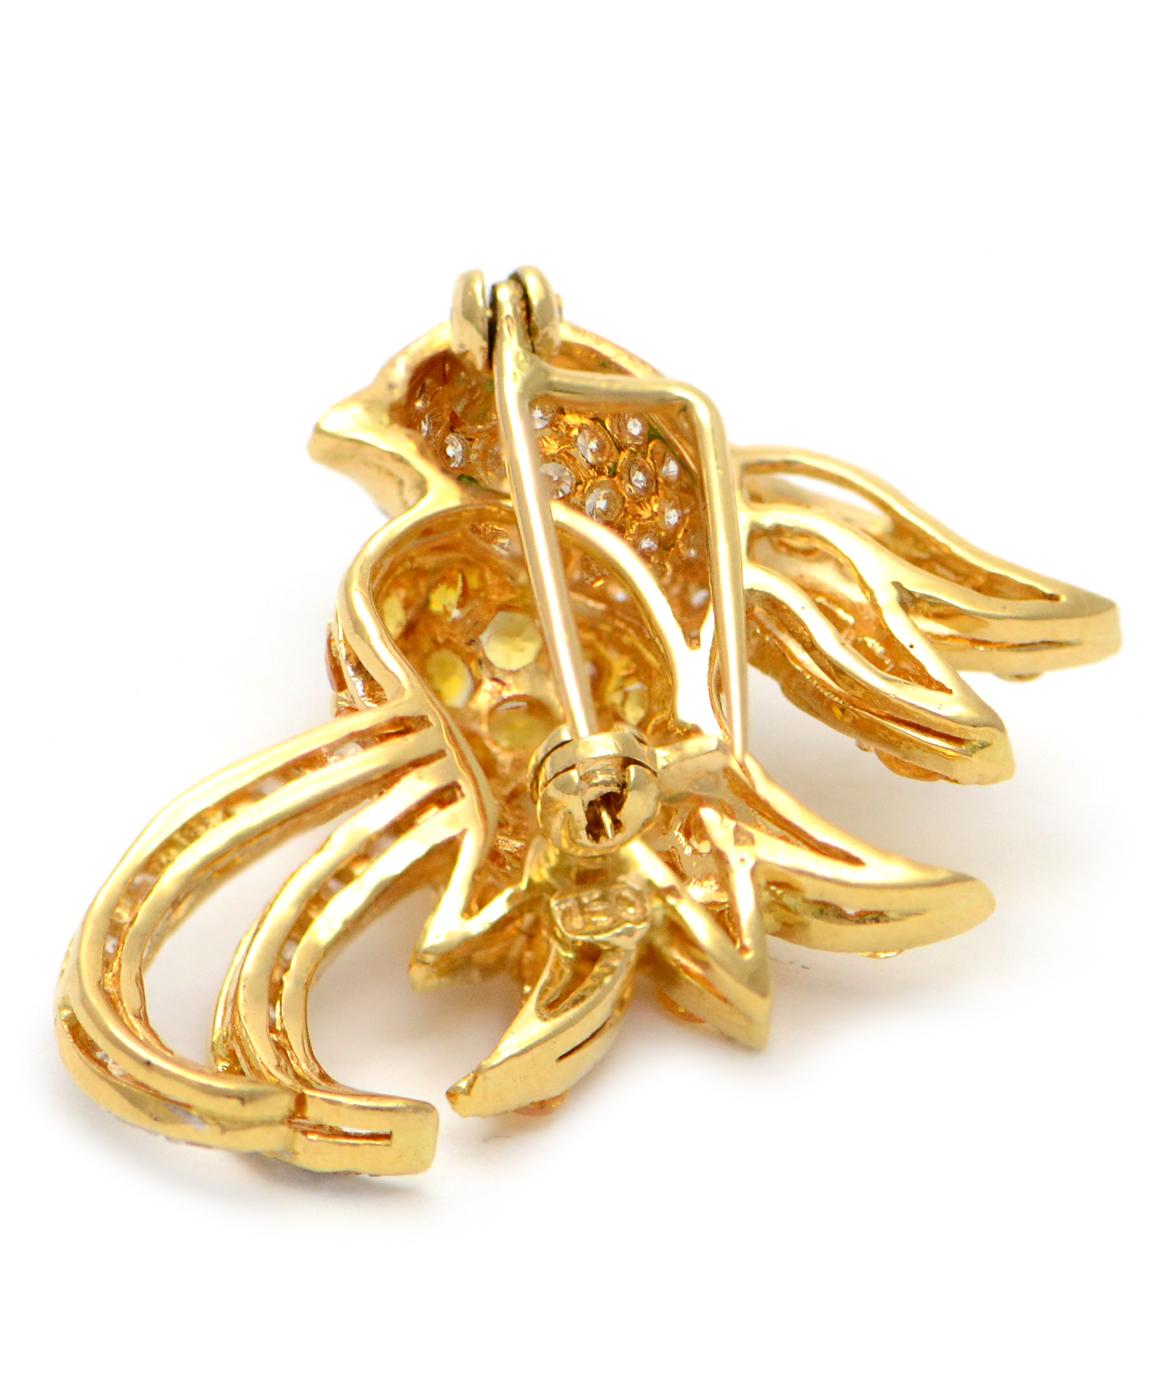 Solid 18K Yellow Gold Bird Brooch with Genuine Diamonds, Citrine & Emerald 10.1g 1